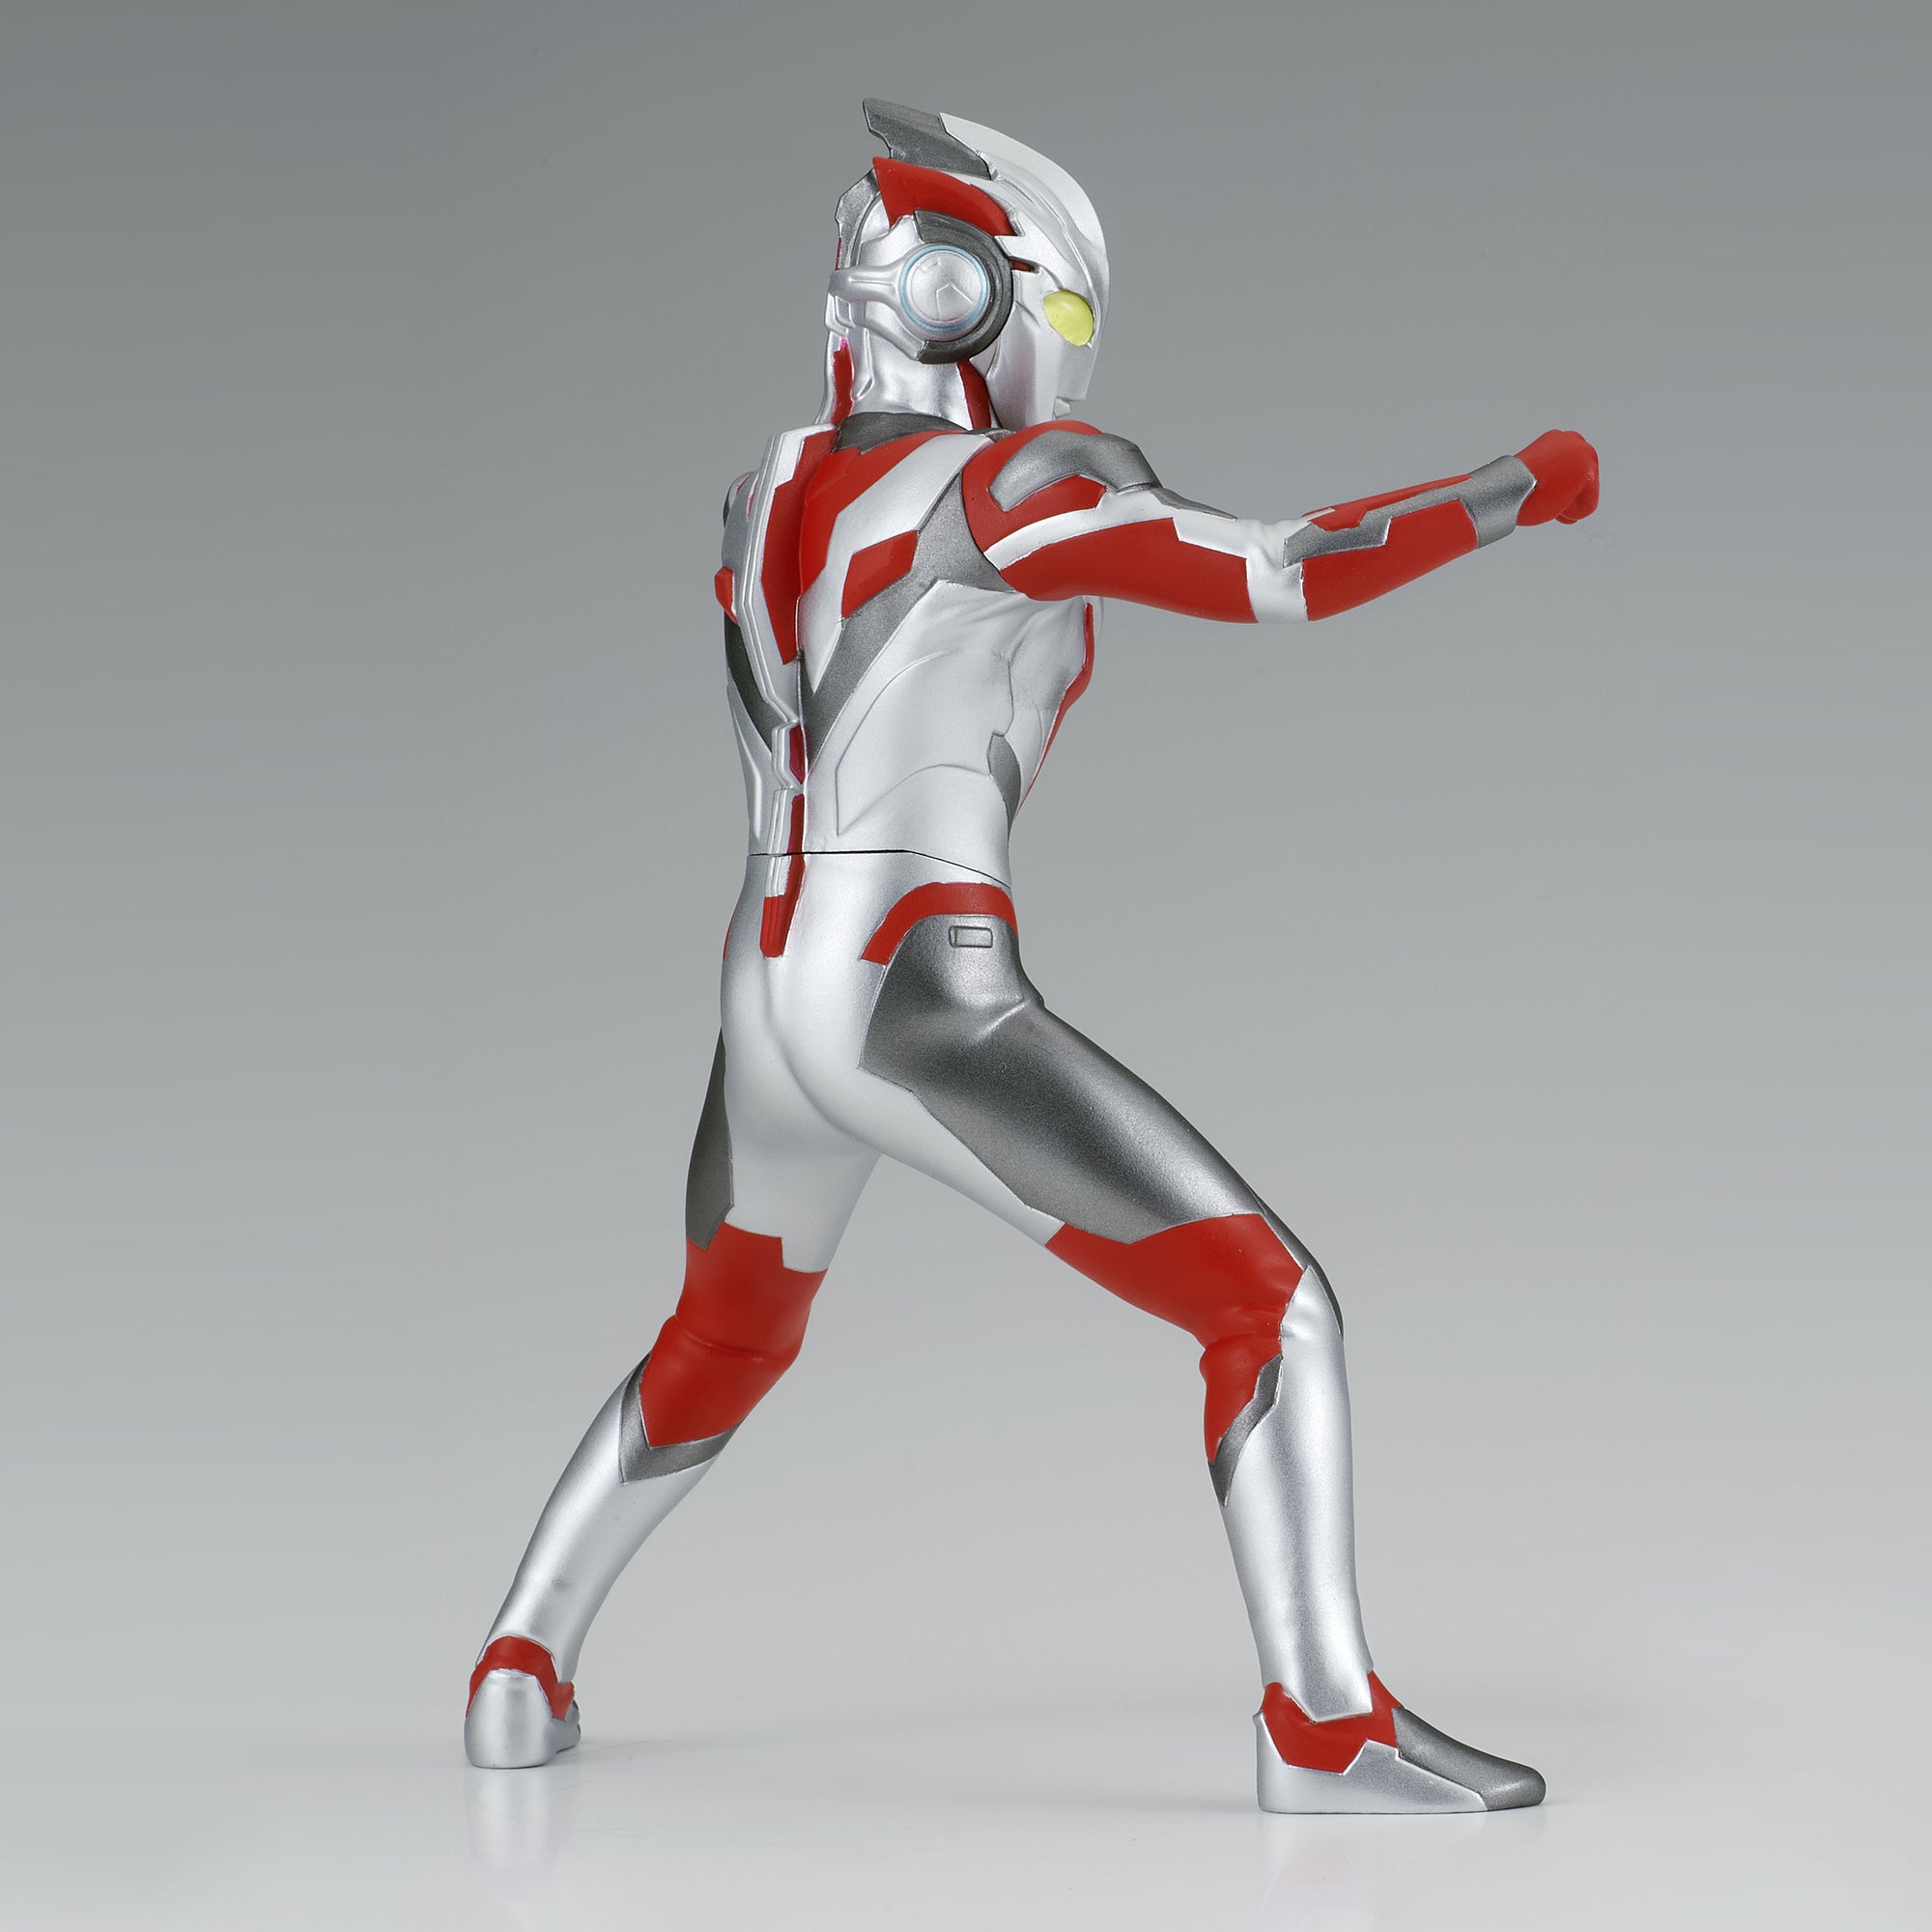 Ultraman X Hero's Brave Statue Figure Ultraman X Ver.A by Banpresto -Banpresto - India - www.superherotoystore.com